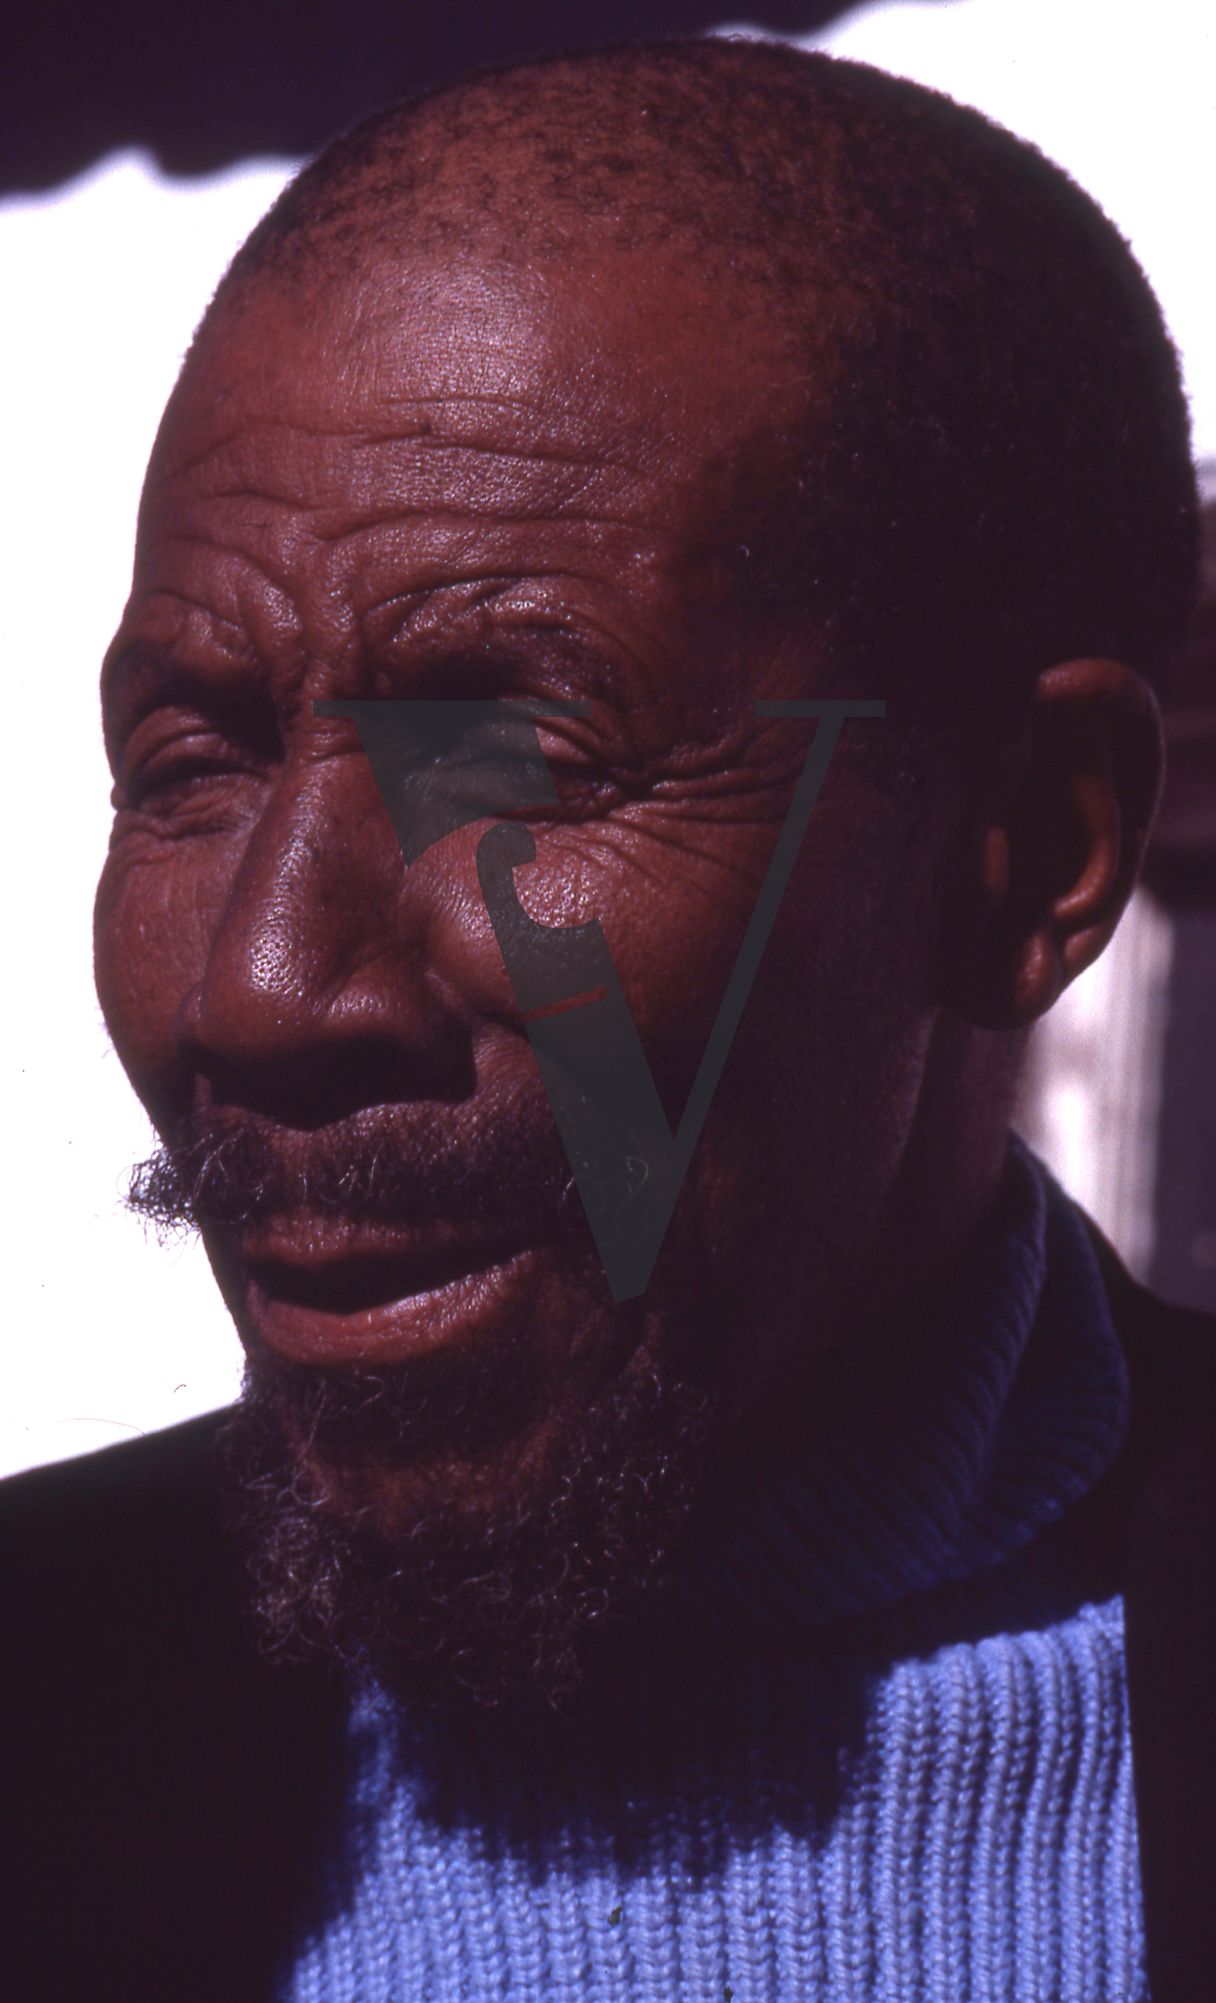 South Africa, Transkei, man, portrait.